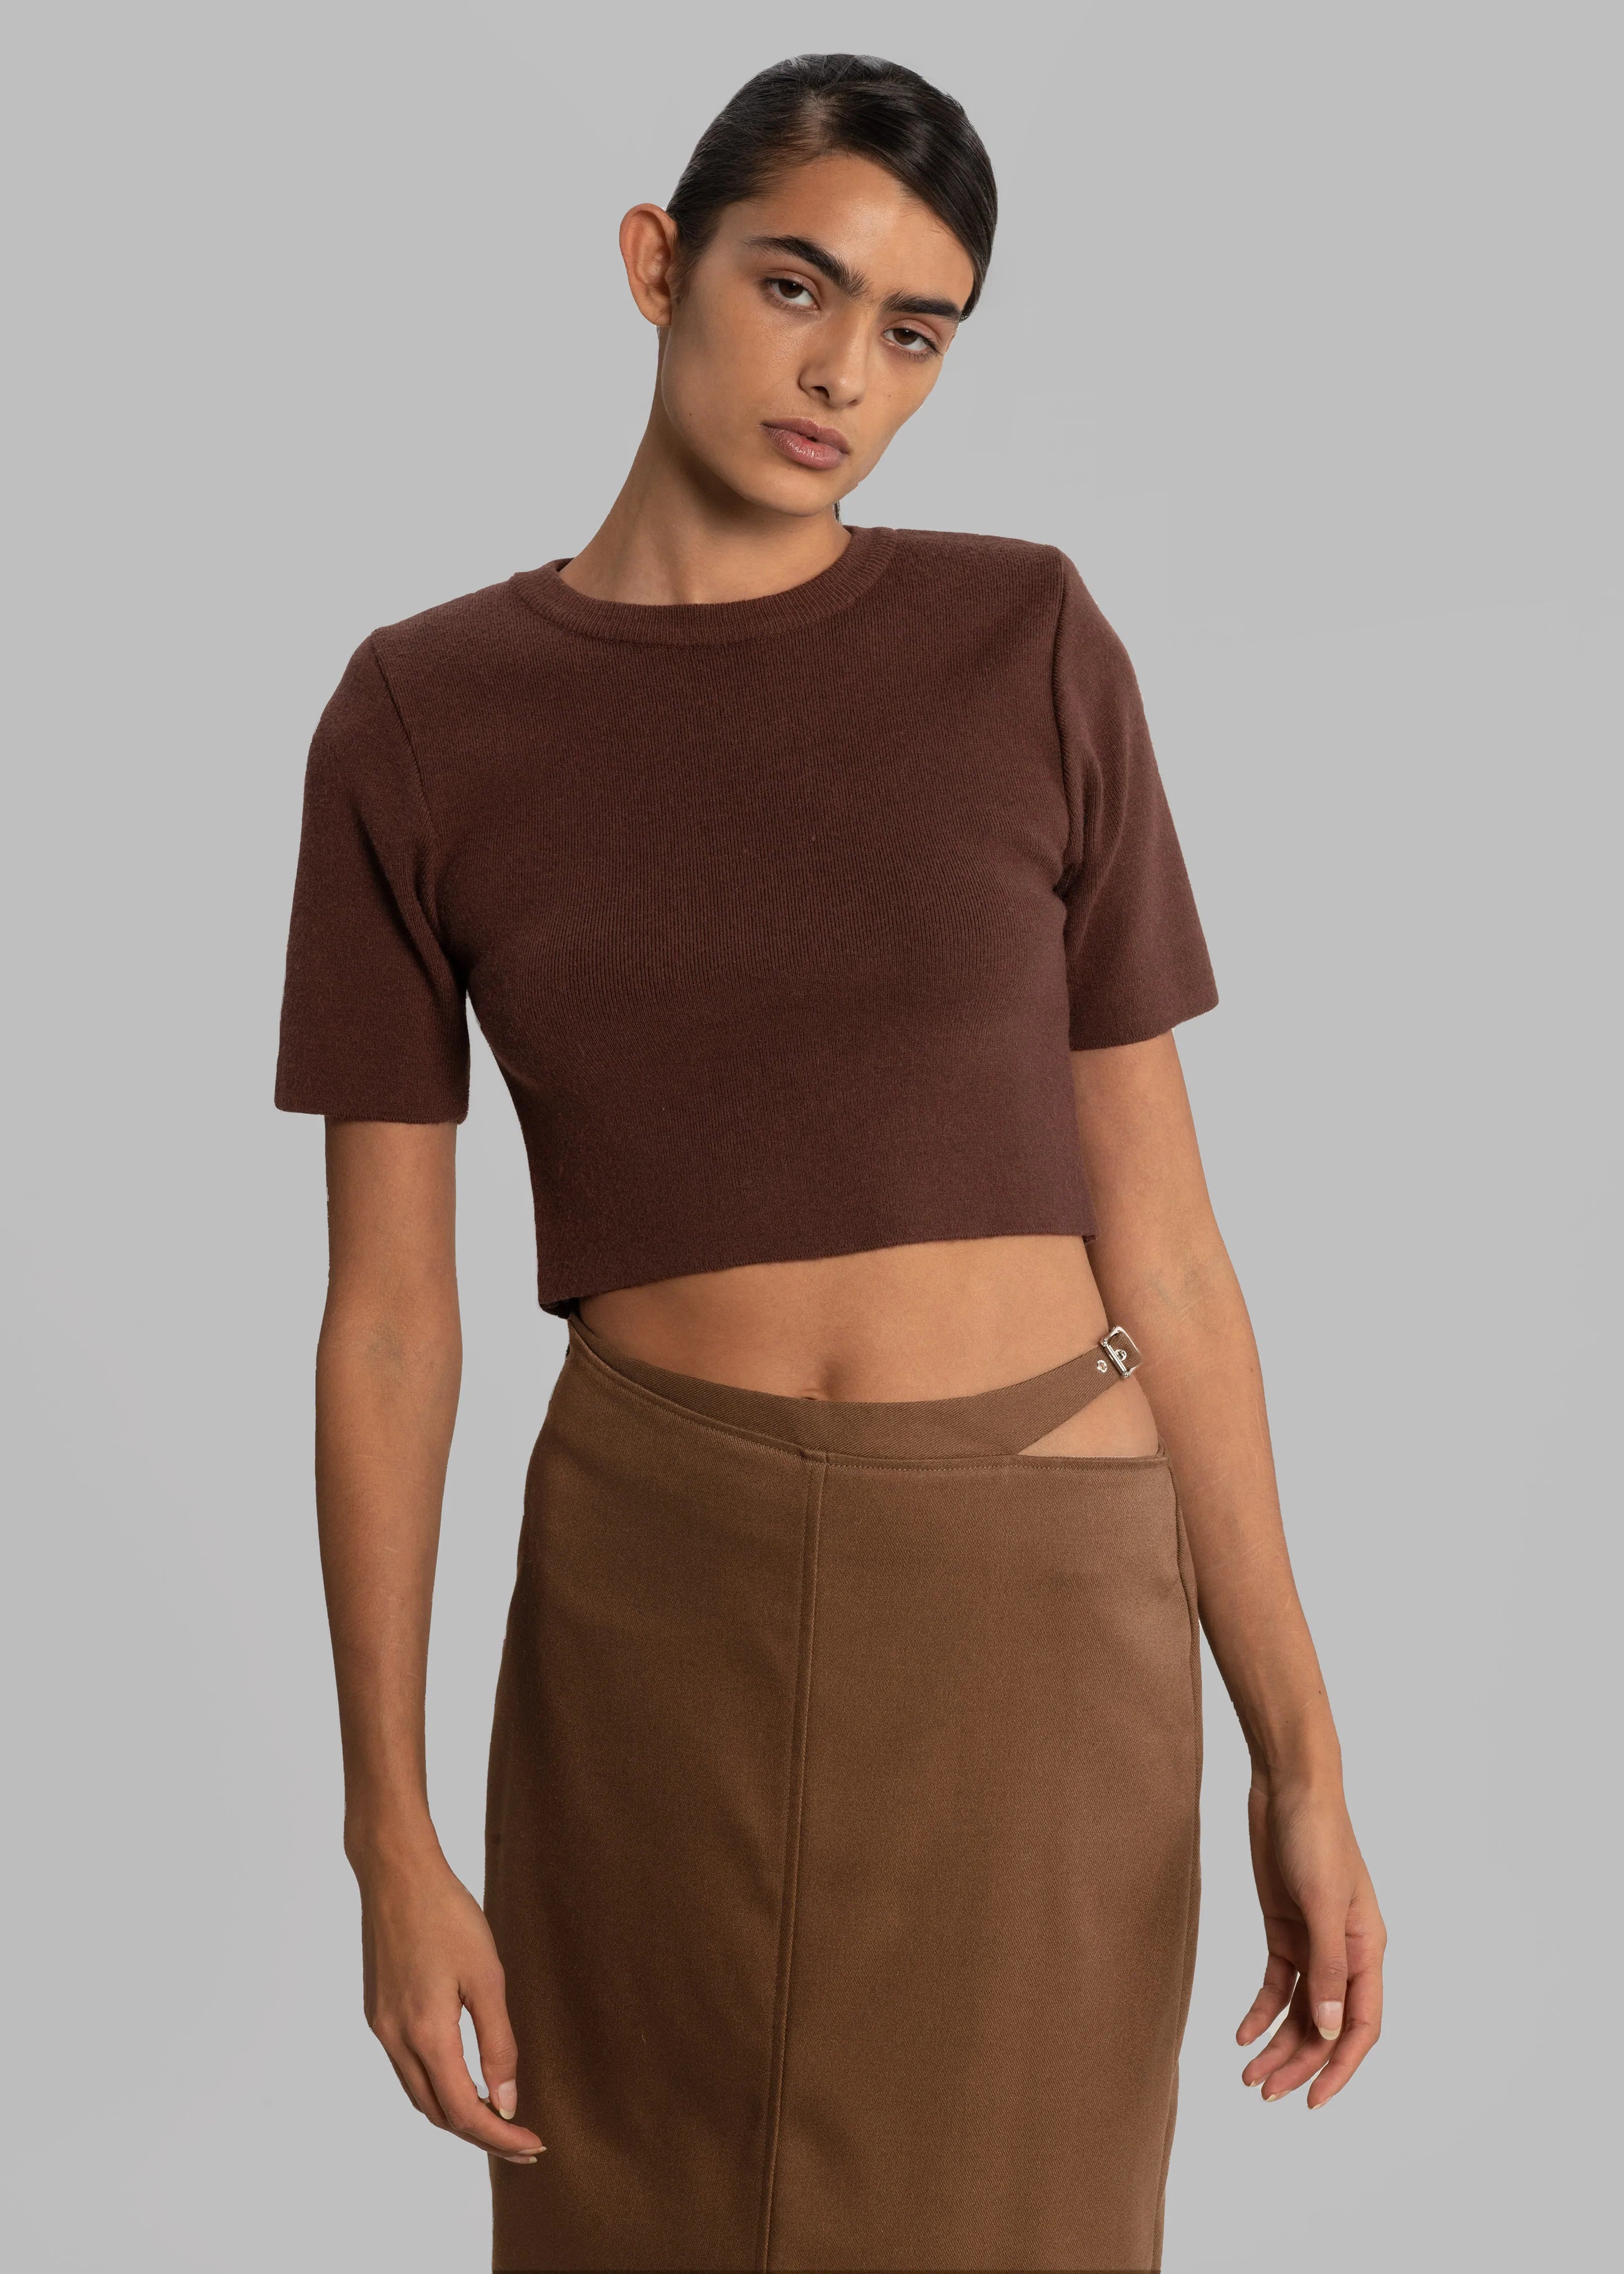 Stacia Cut Out Midi Skirt - Brown - 10